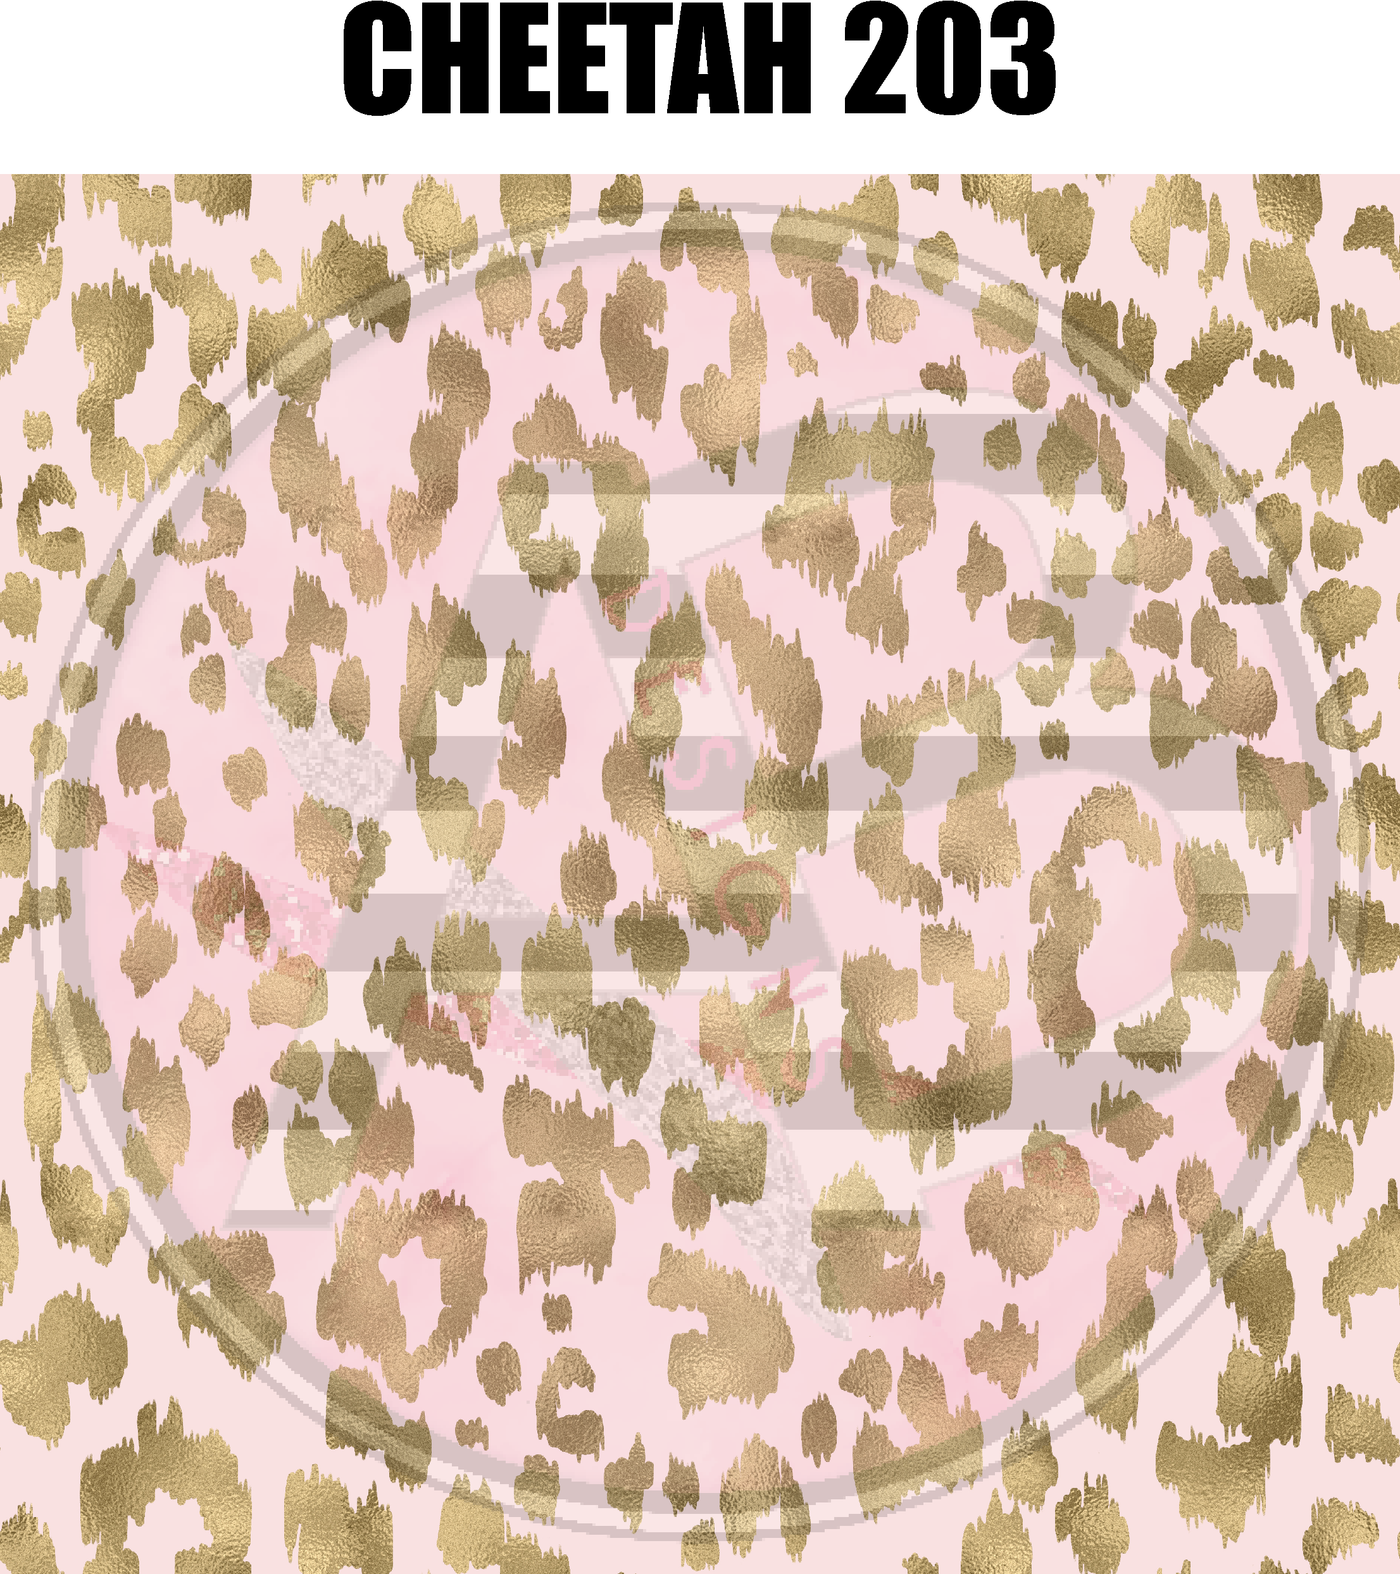 Adhesive Patterned Vinyl - Cheetah 203